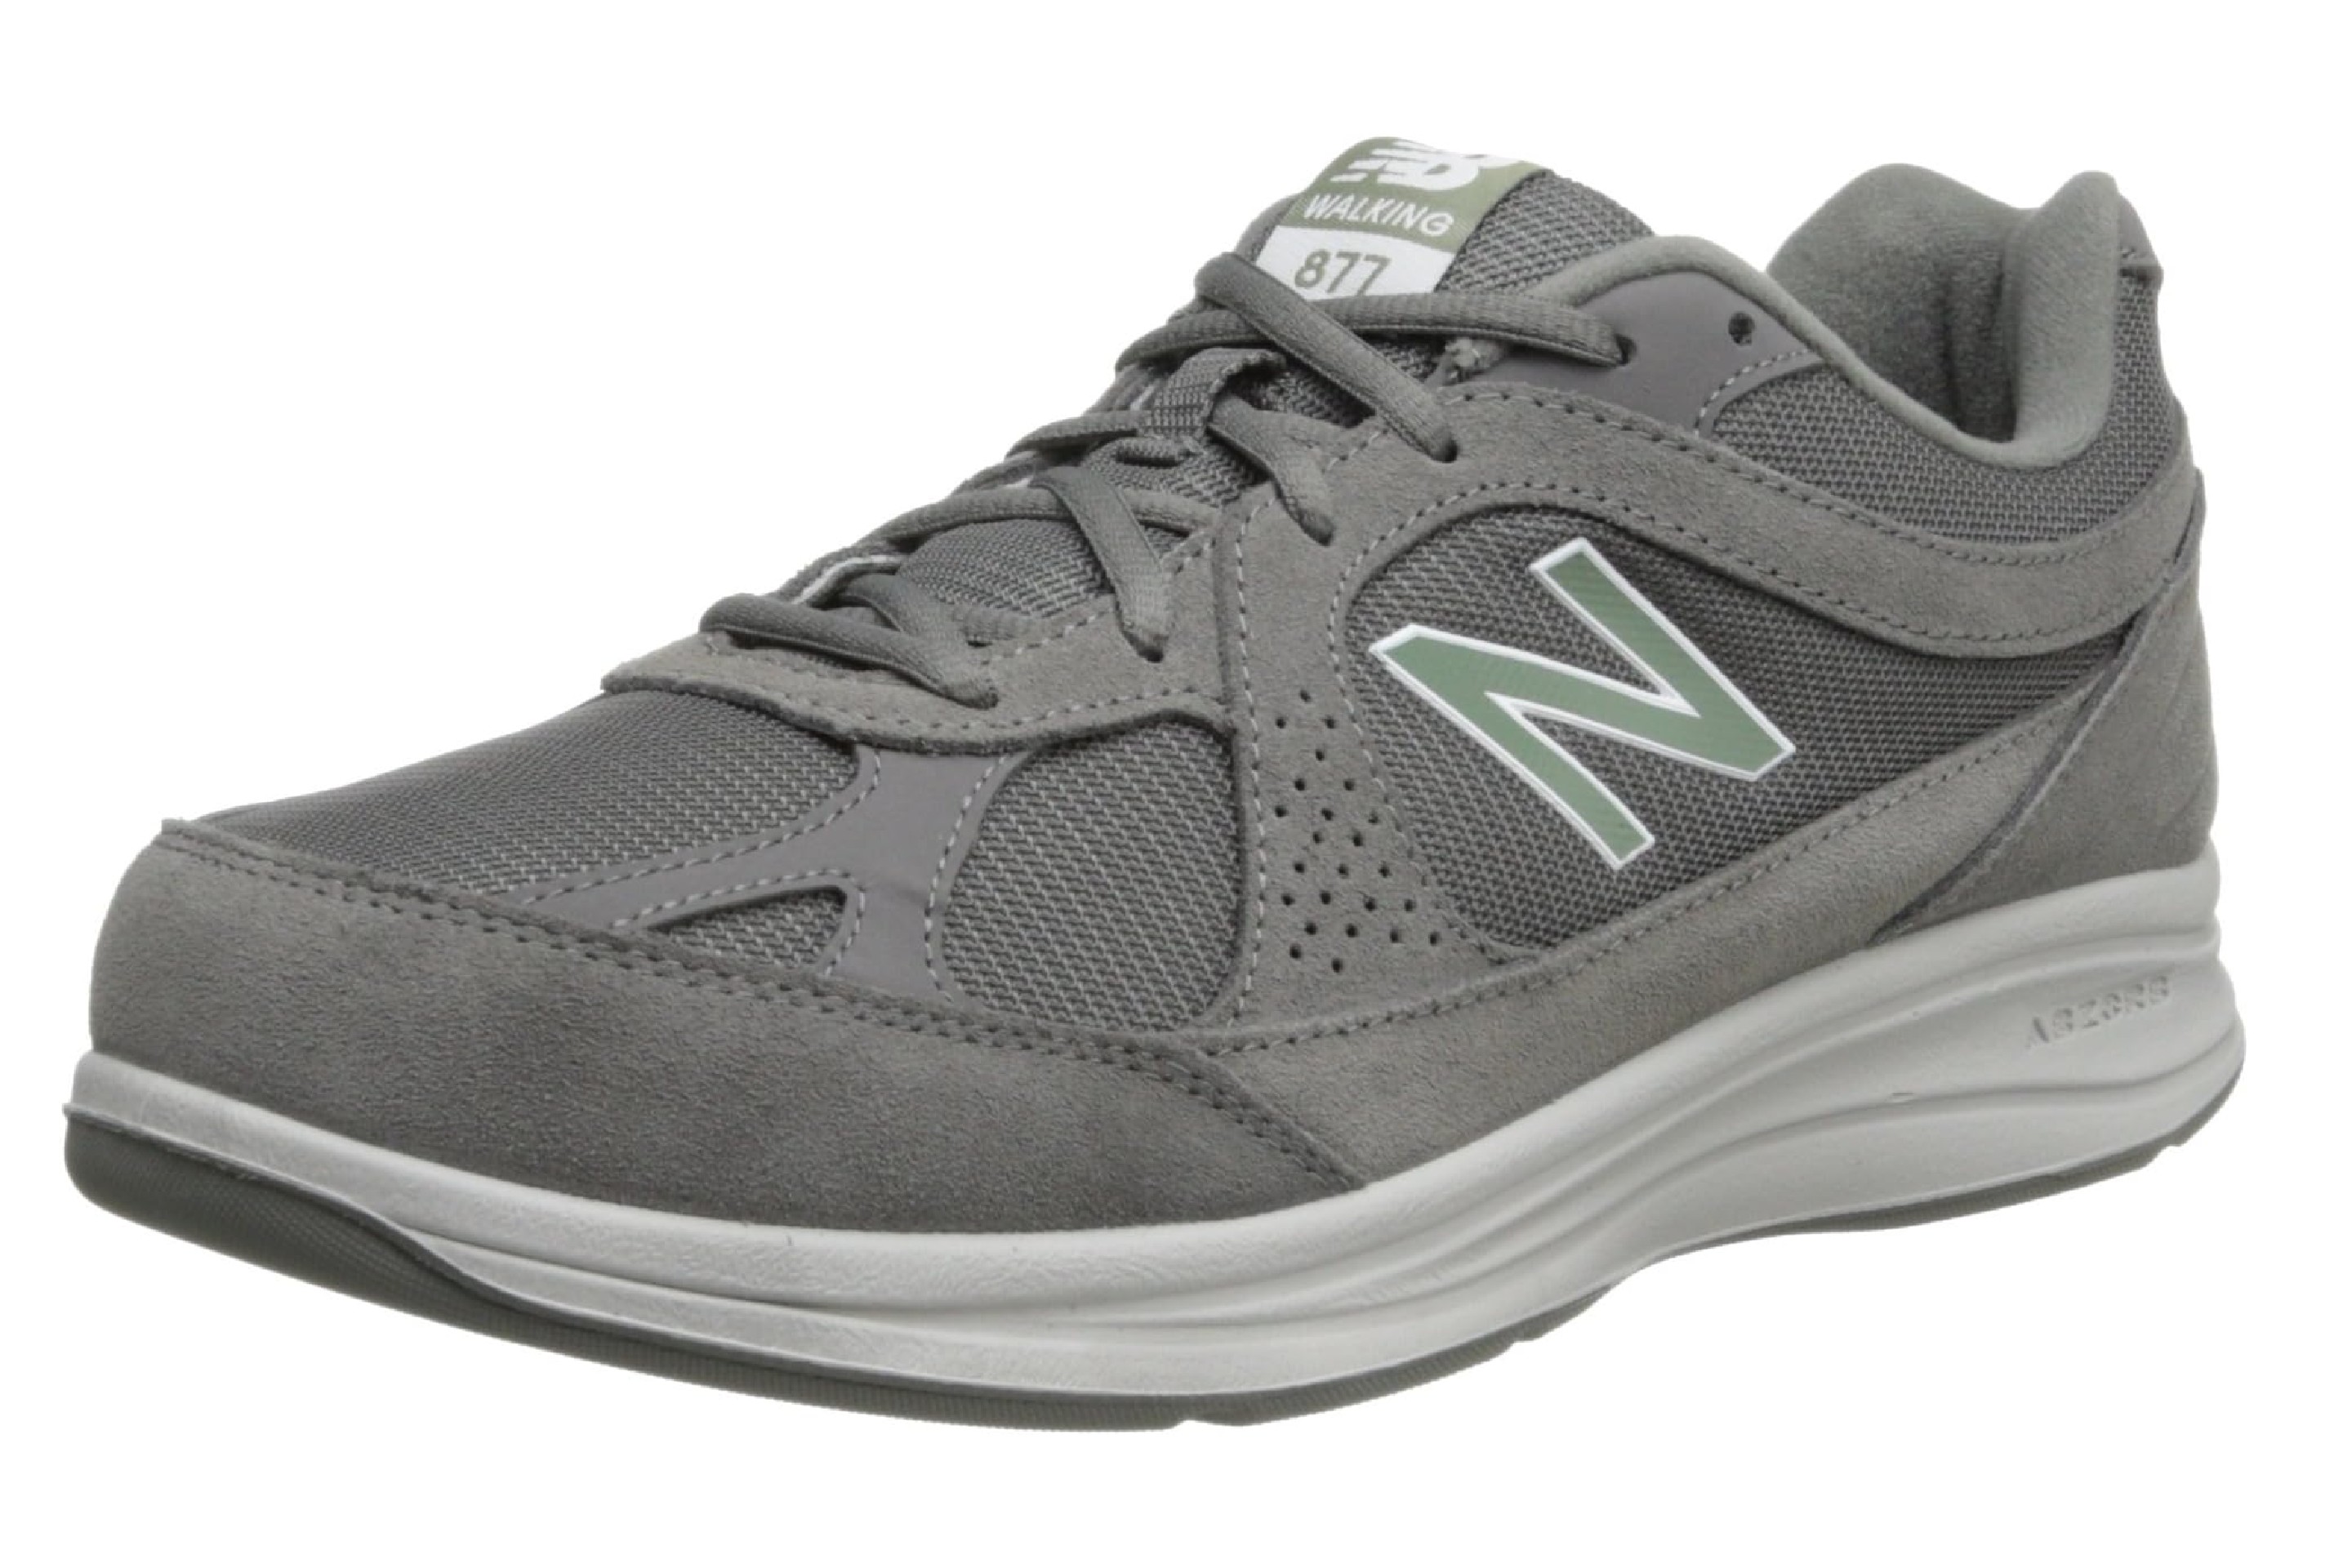 New Balance Men's 877 V1 Walking Shoes